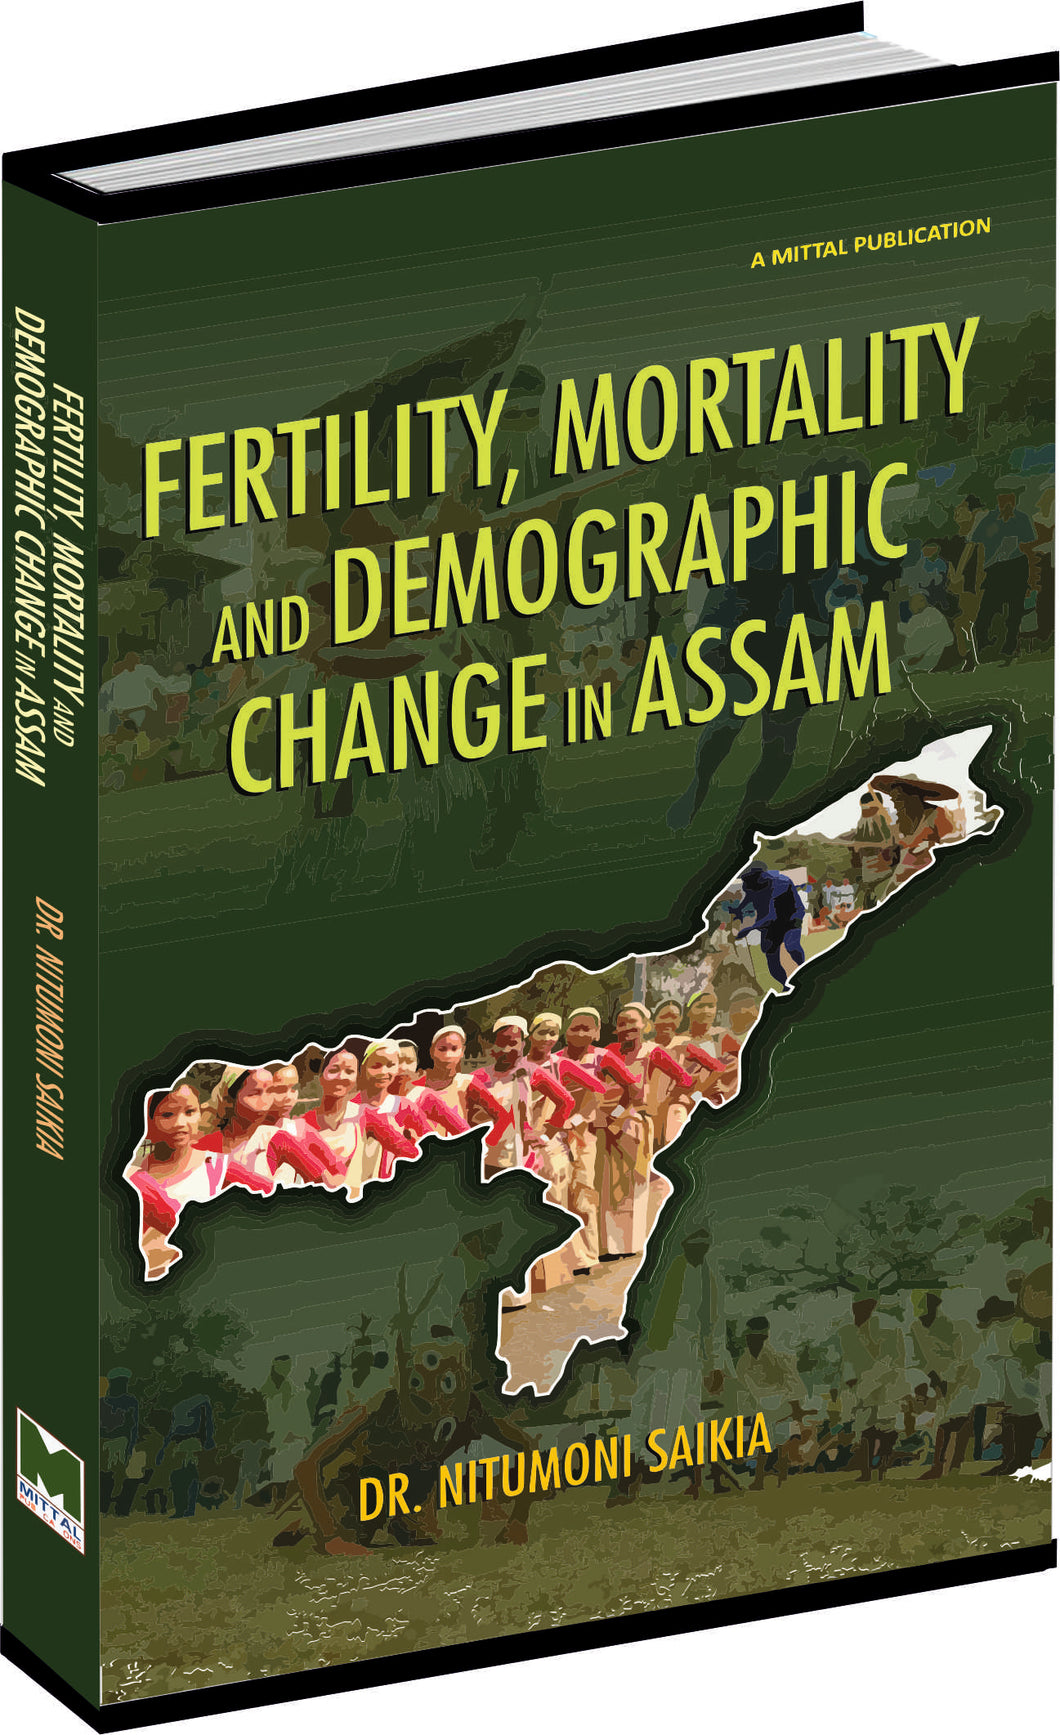 Fertility, Mortality and Demographic Change in Assam: A Study of Sonowal Kacharis by Dr. Nitumoni Saikia